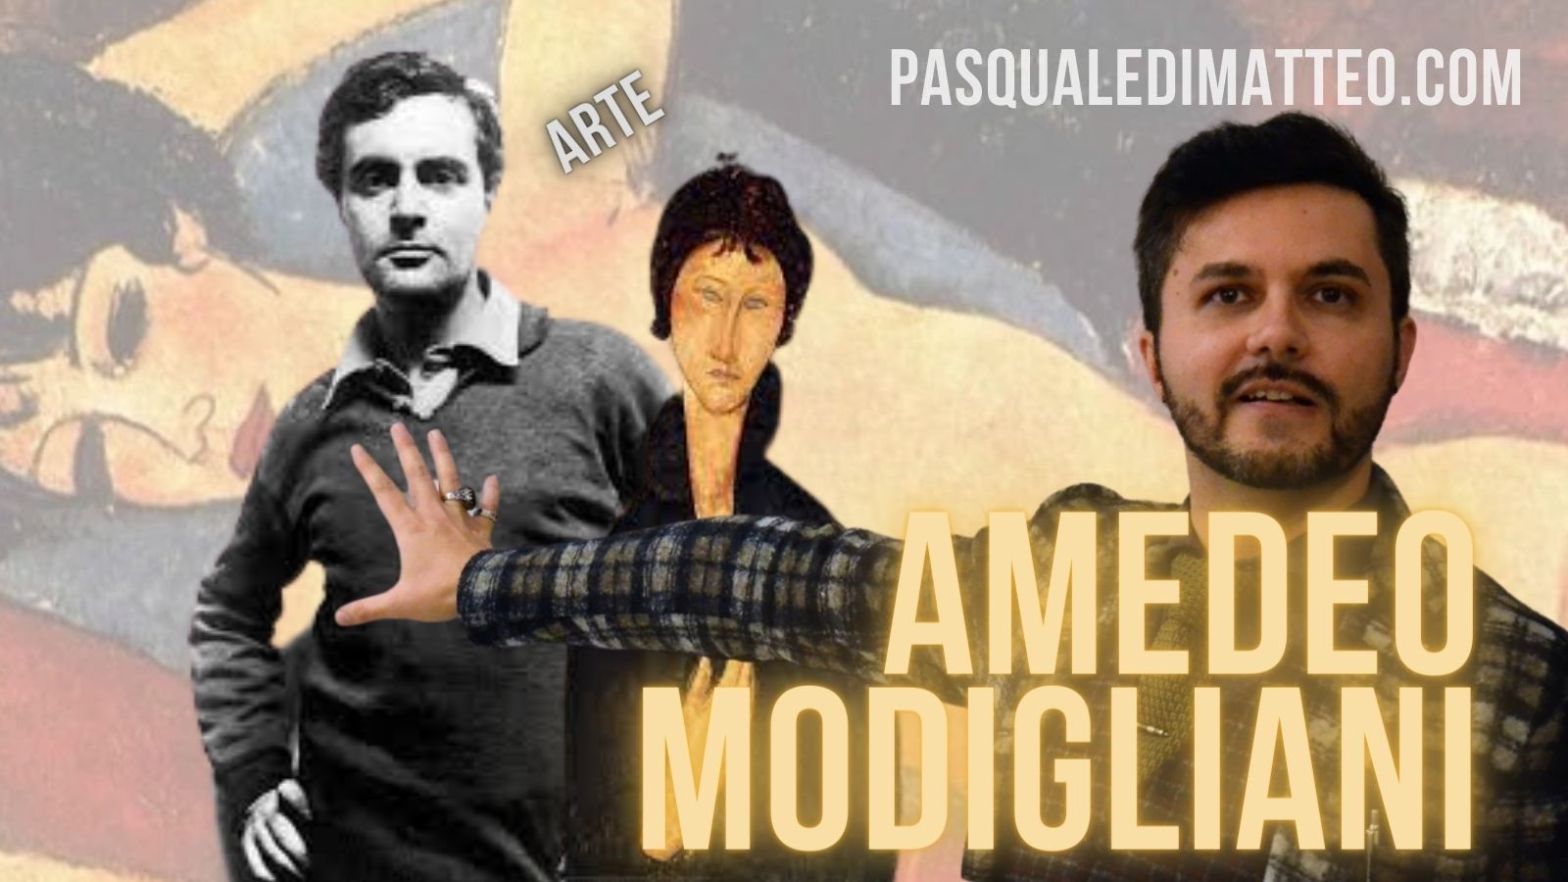 Copertina di Amedeo Modigliani raccontato da Pasquale Di Matteo